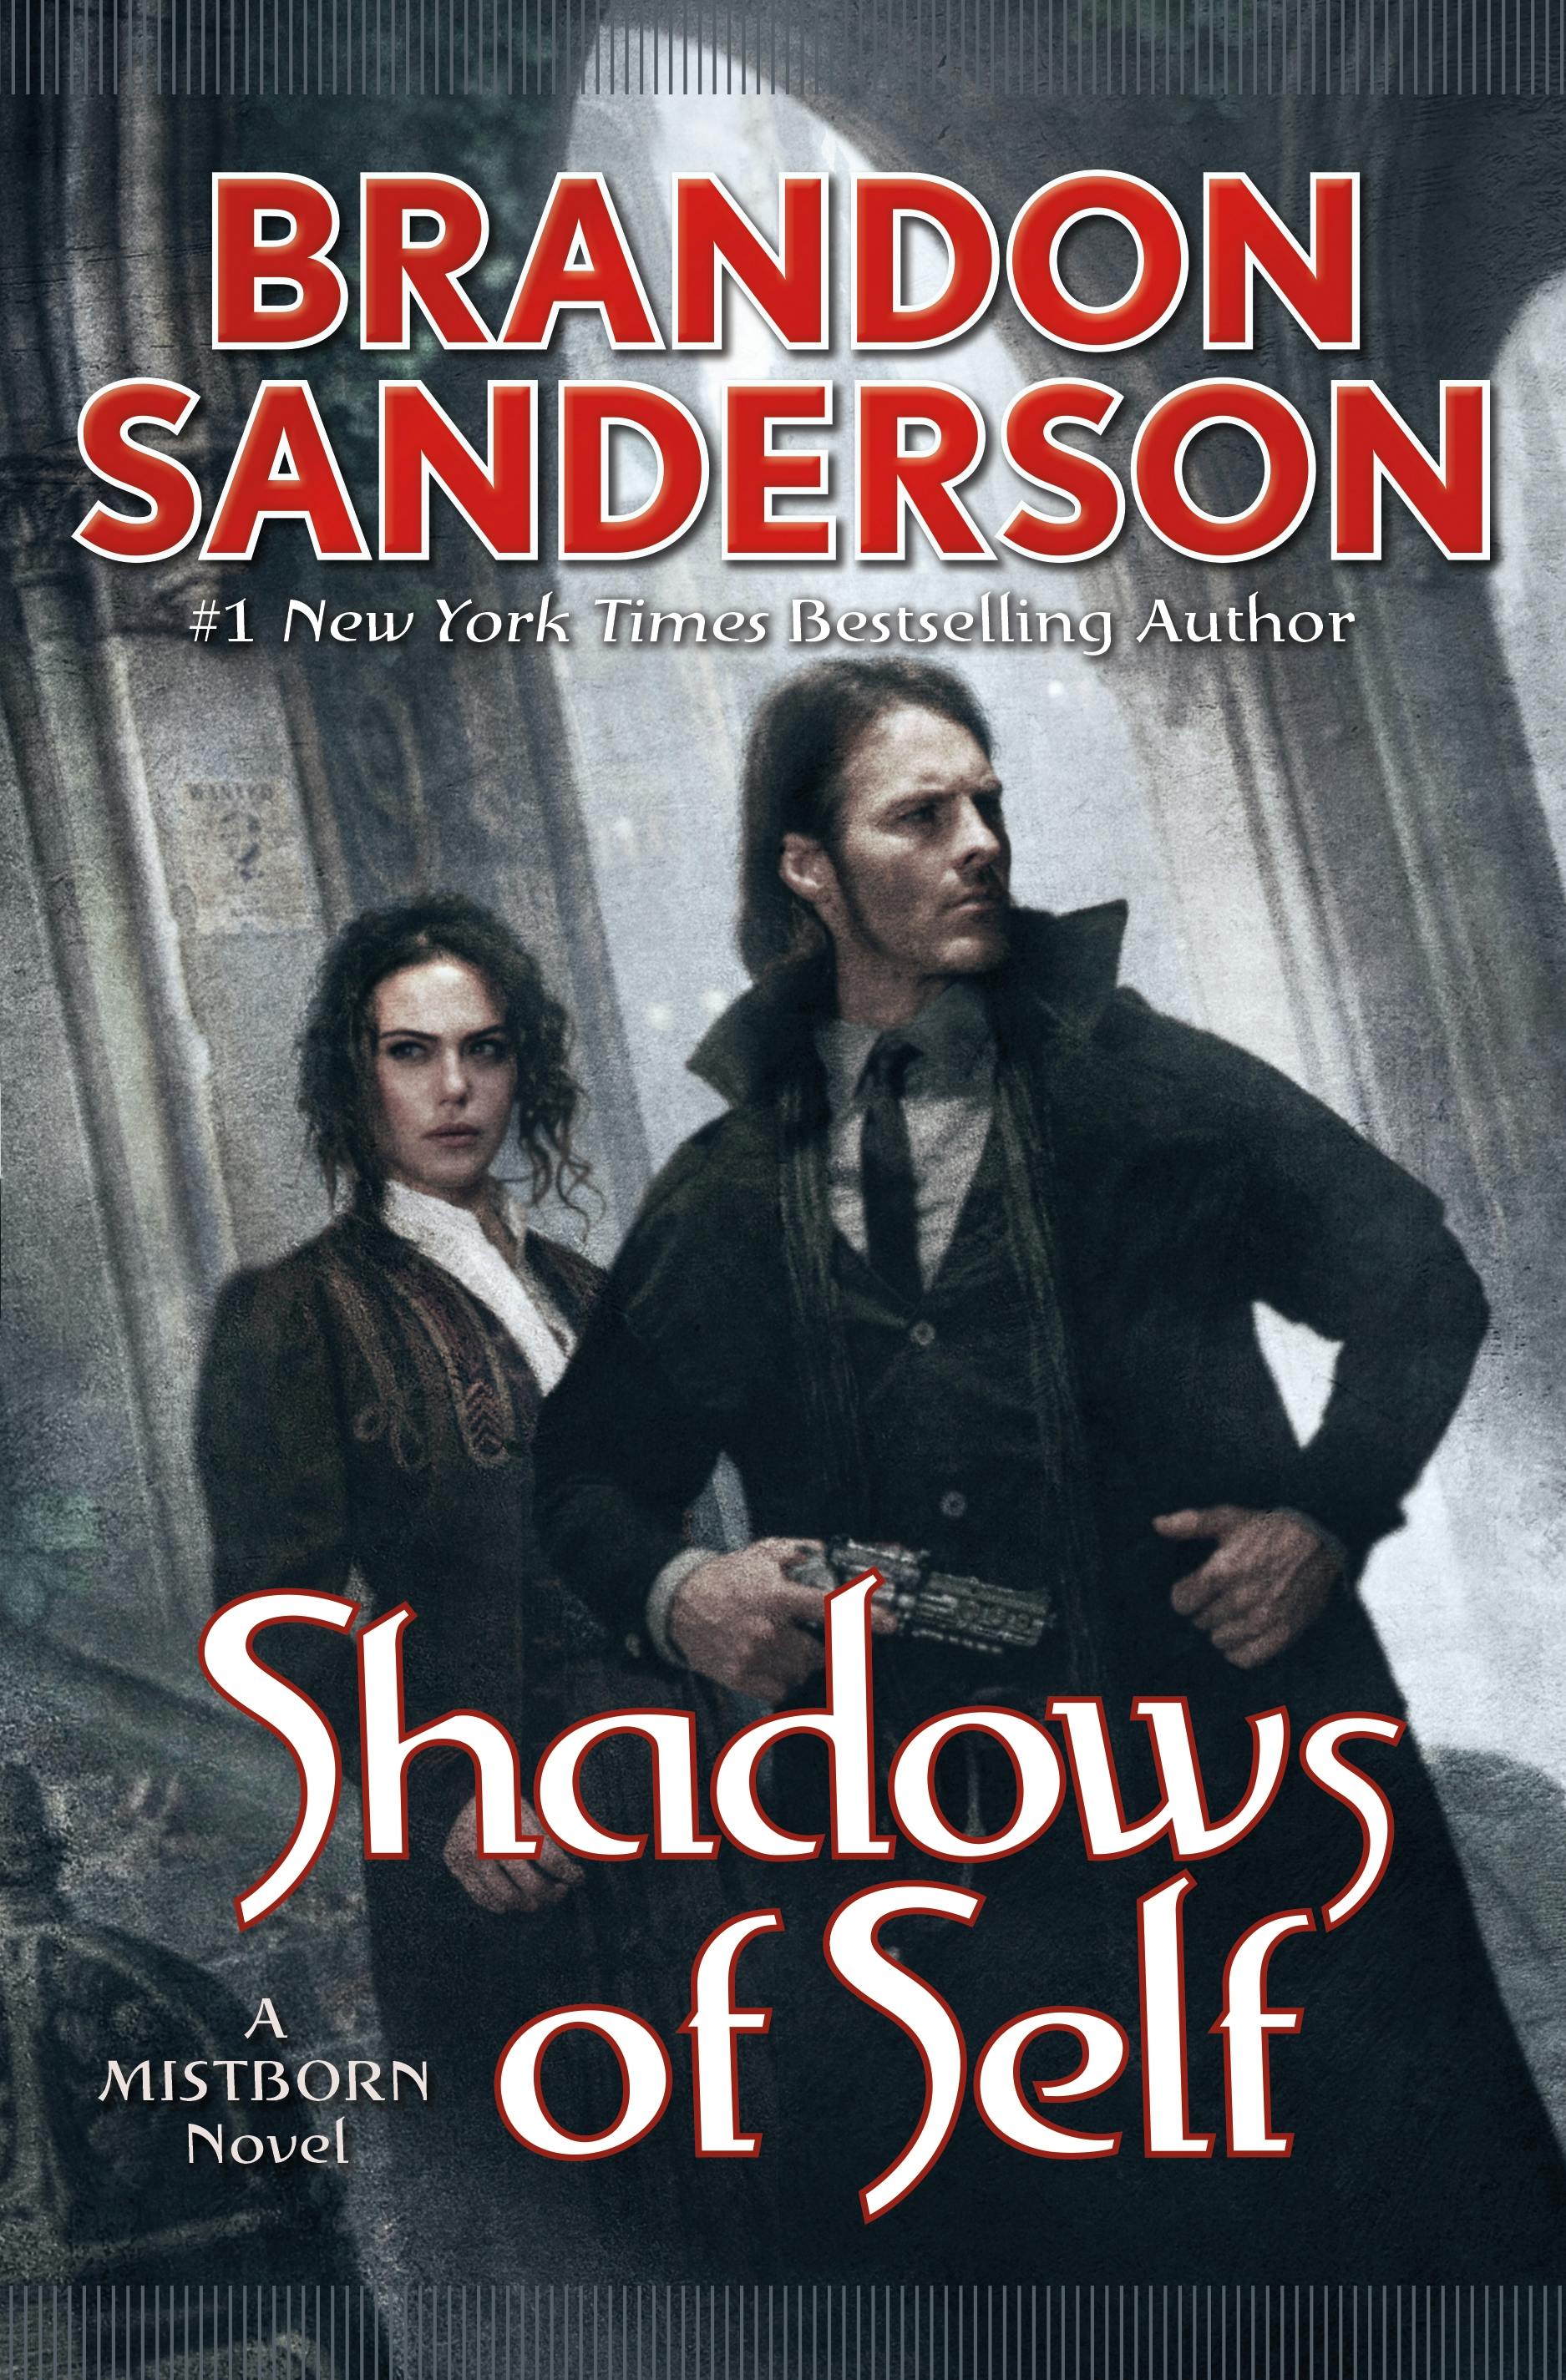 Mistborn: Secret History by Brandon Sanderson, Hardcover